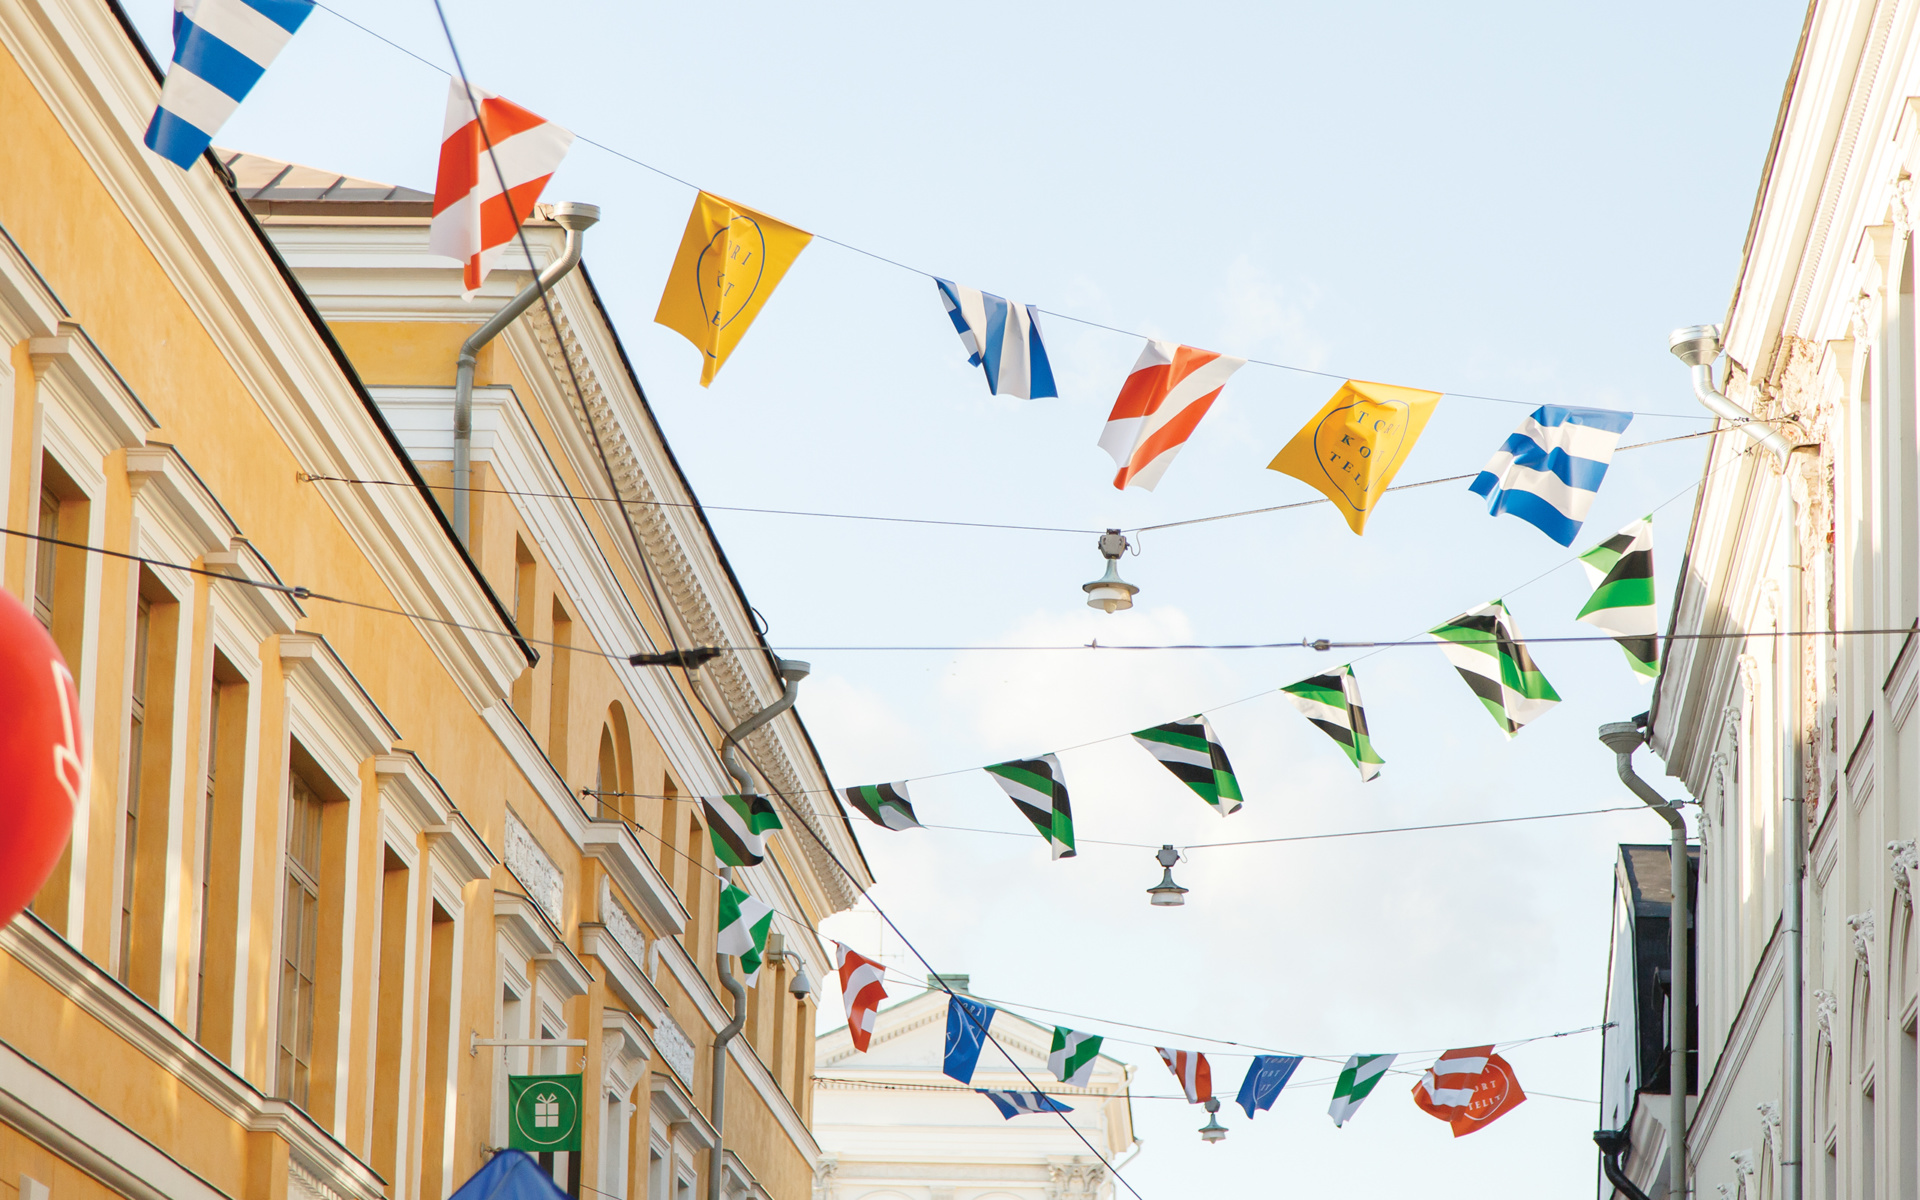 Logo, flags and patterns for Torikorttelit, the old town district of Helsinki, designed by KokoroMoi